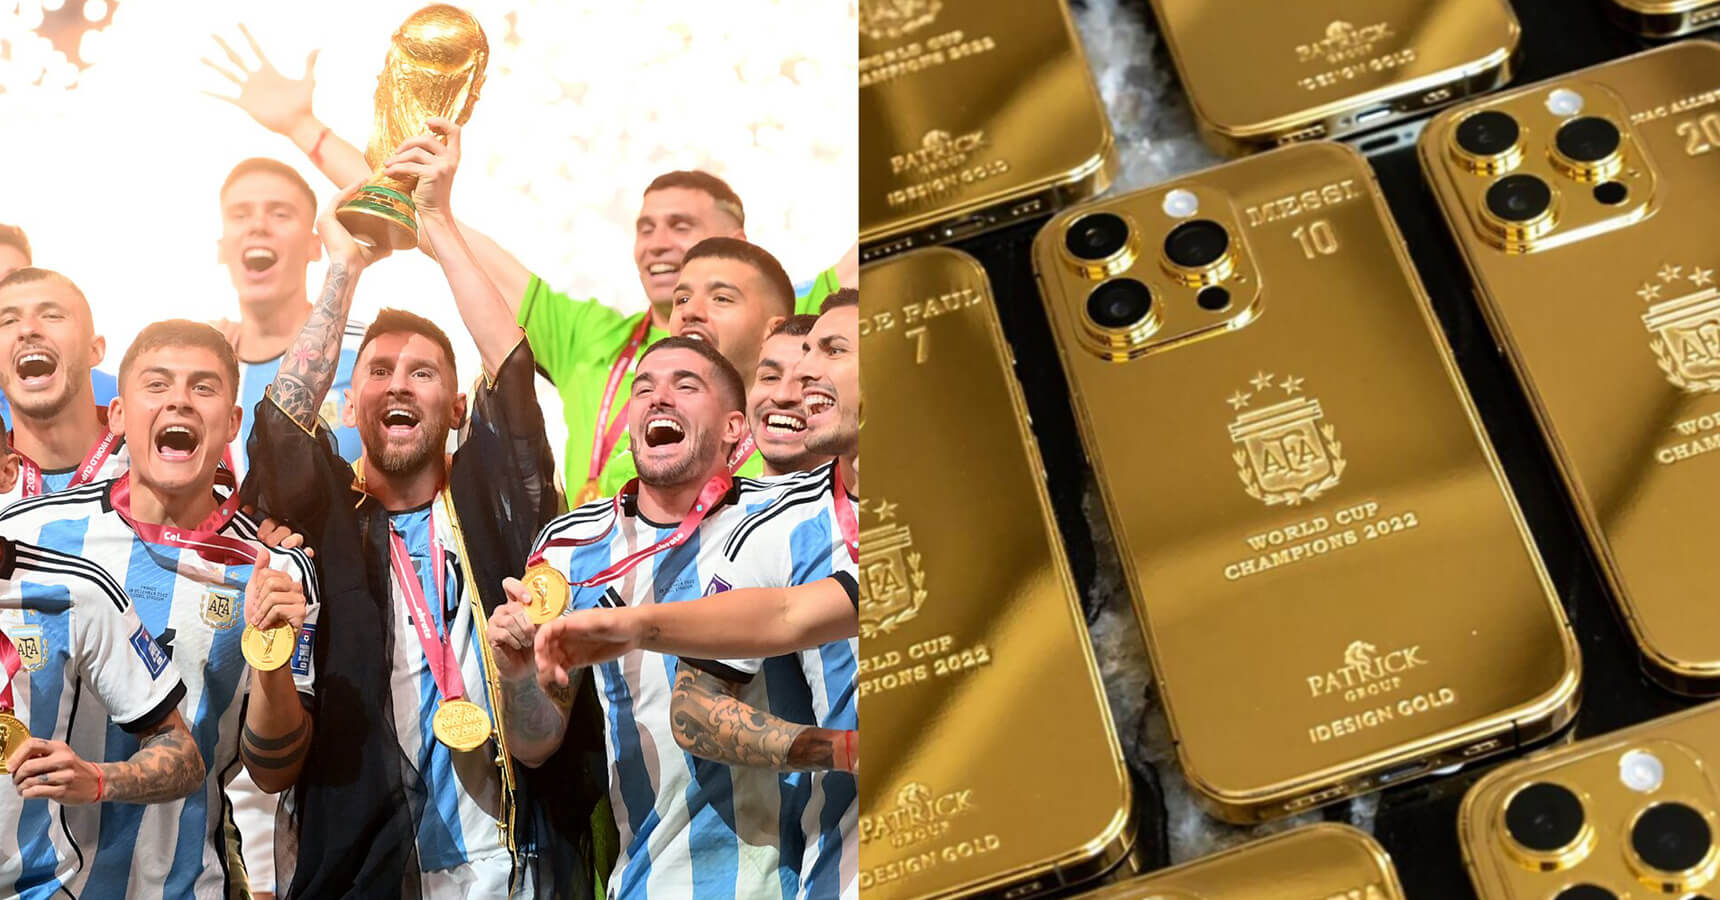 Lionel Messi Orders 35 Gold iPhones